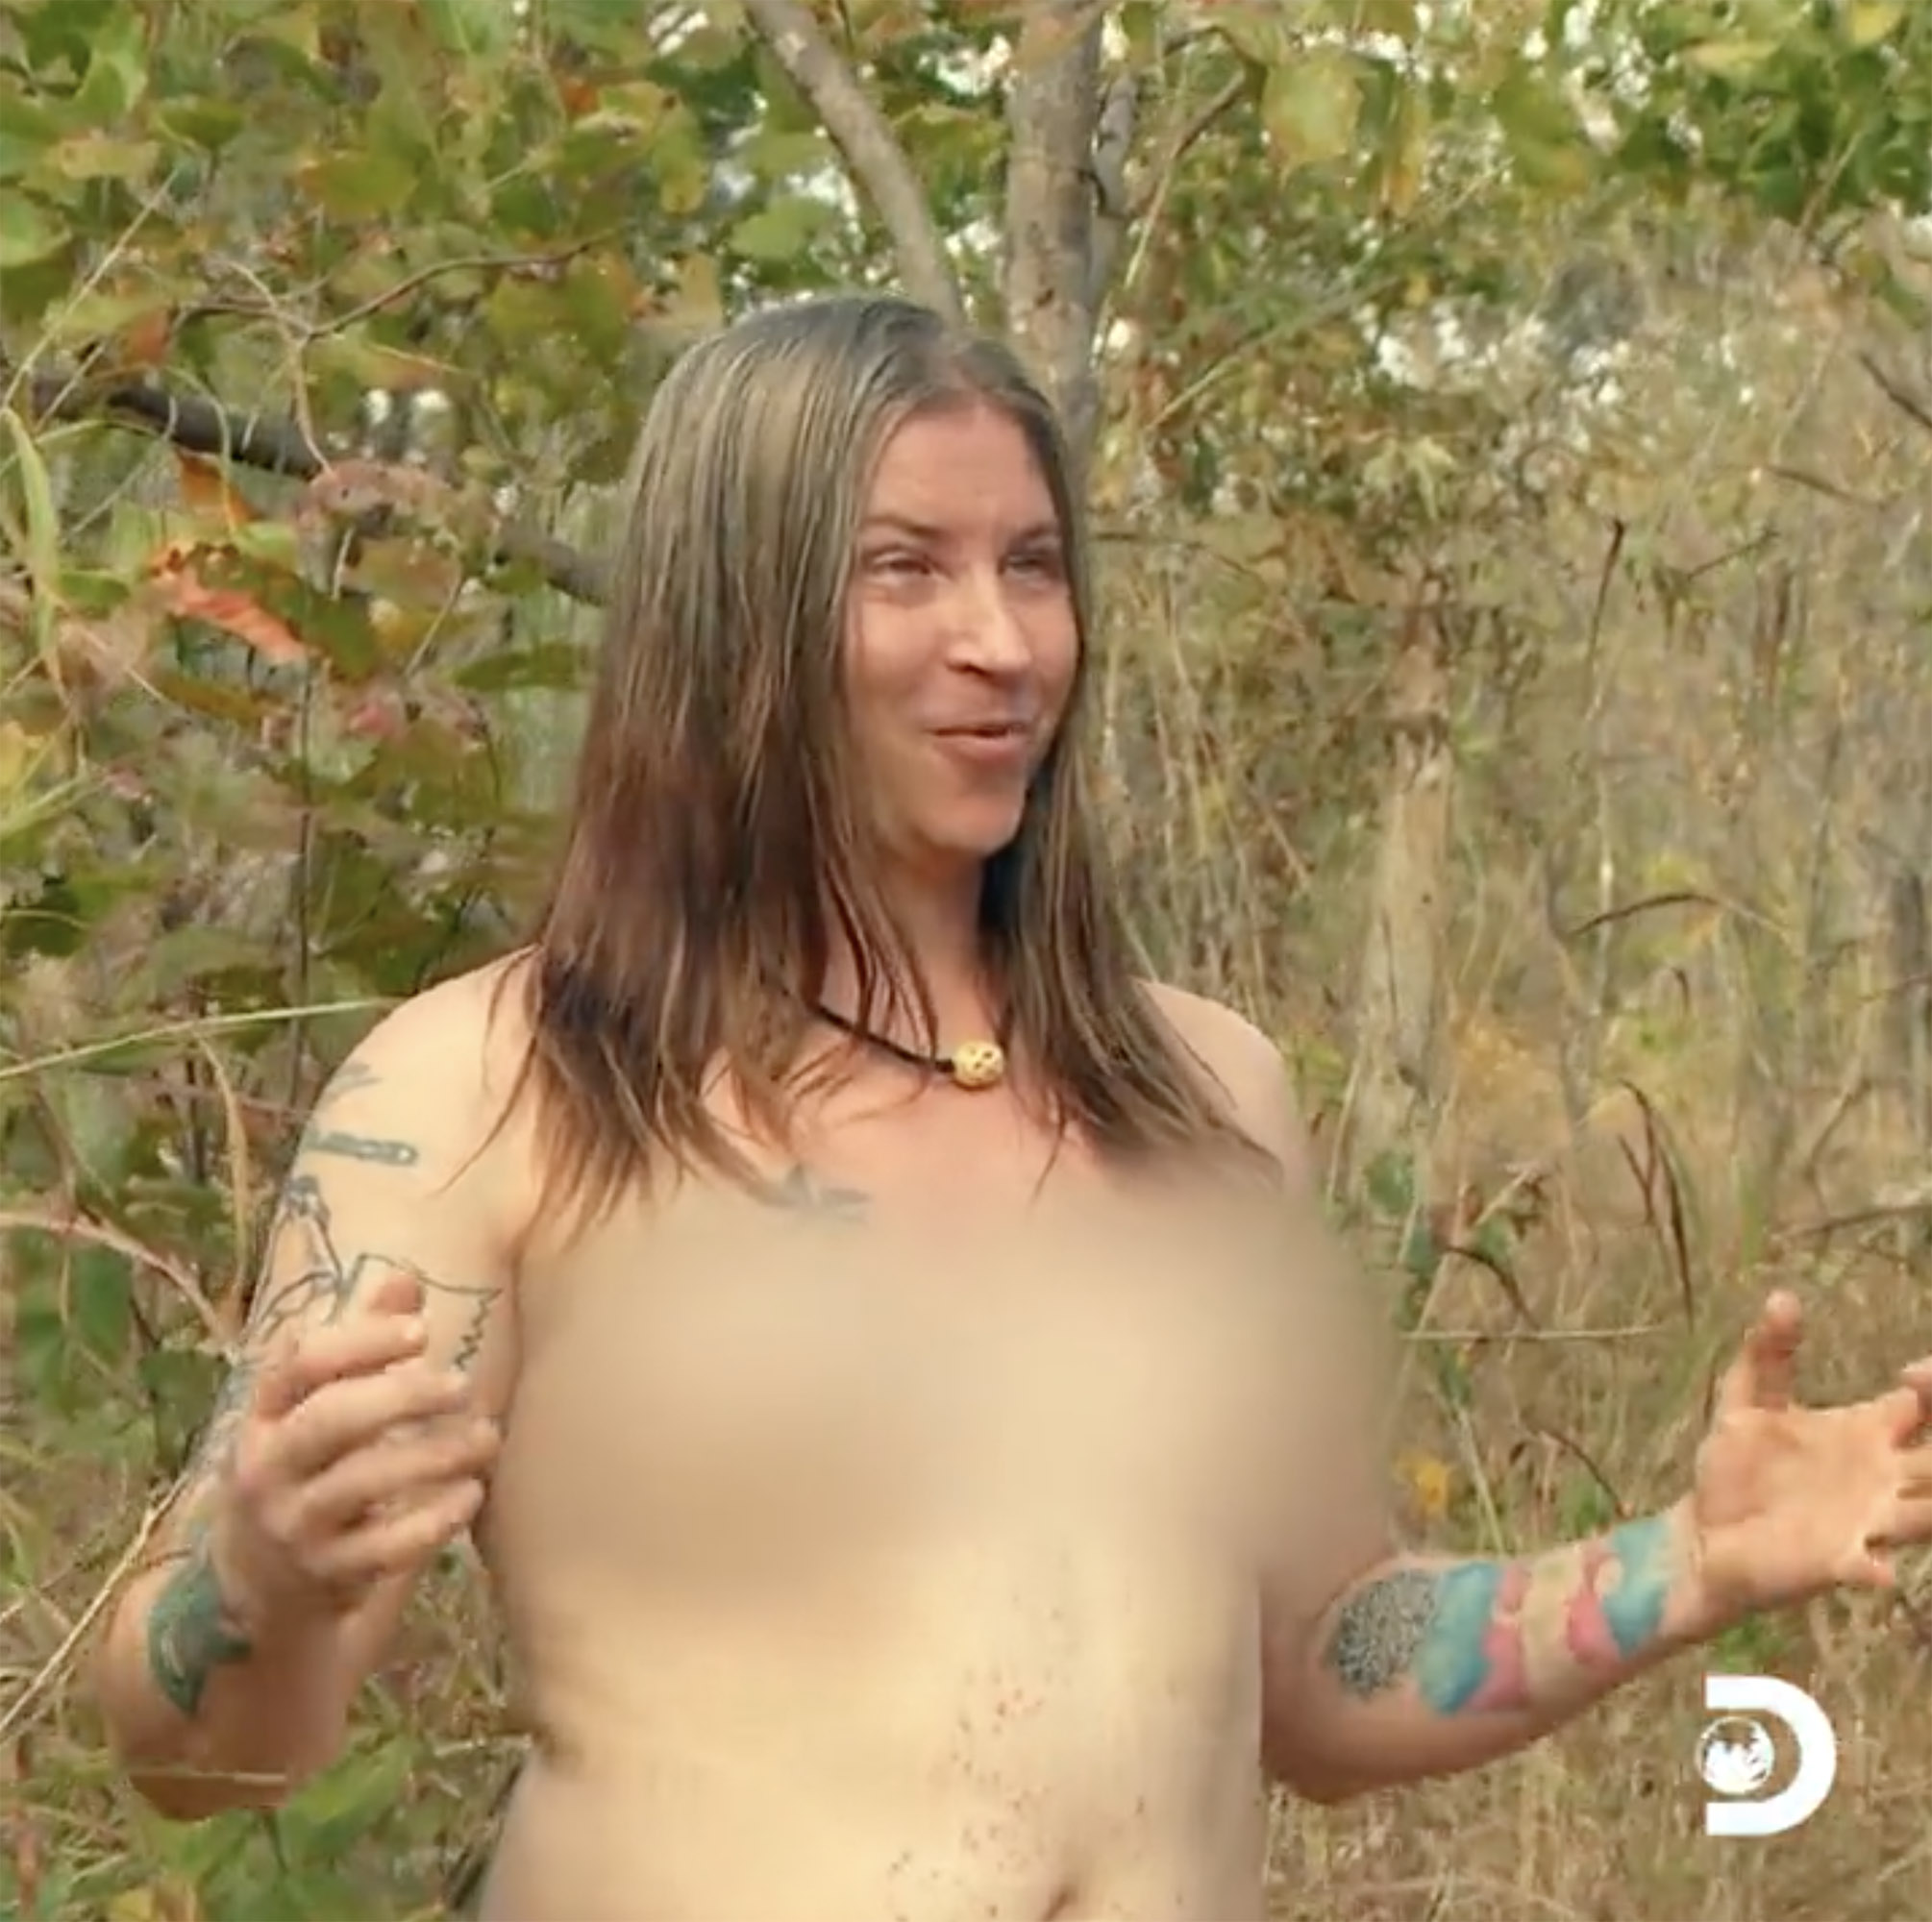 debbie rumpza share trans woman naked photos